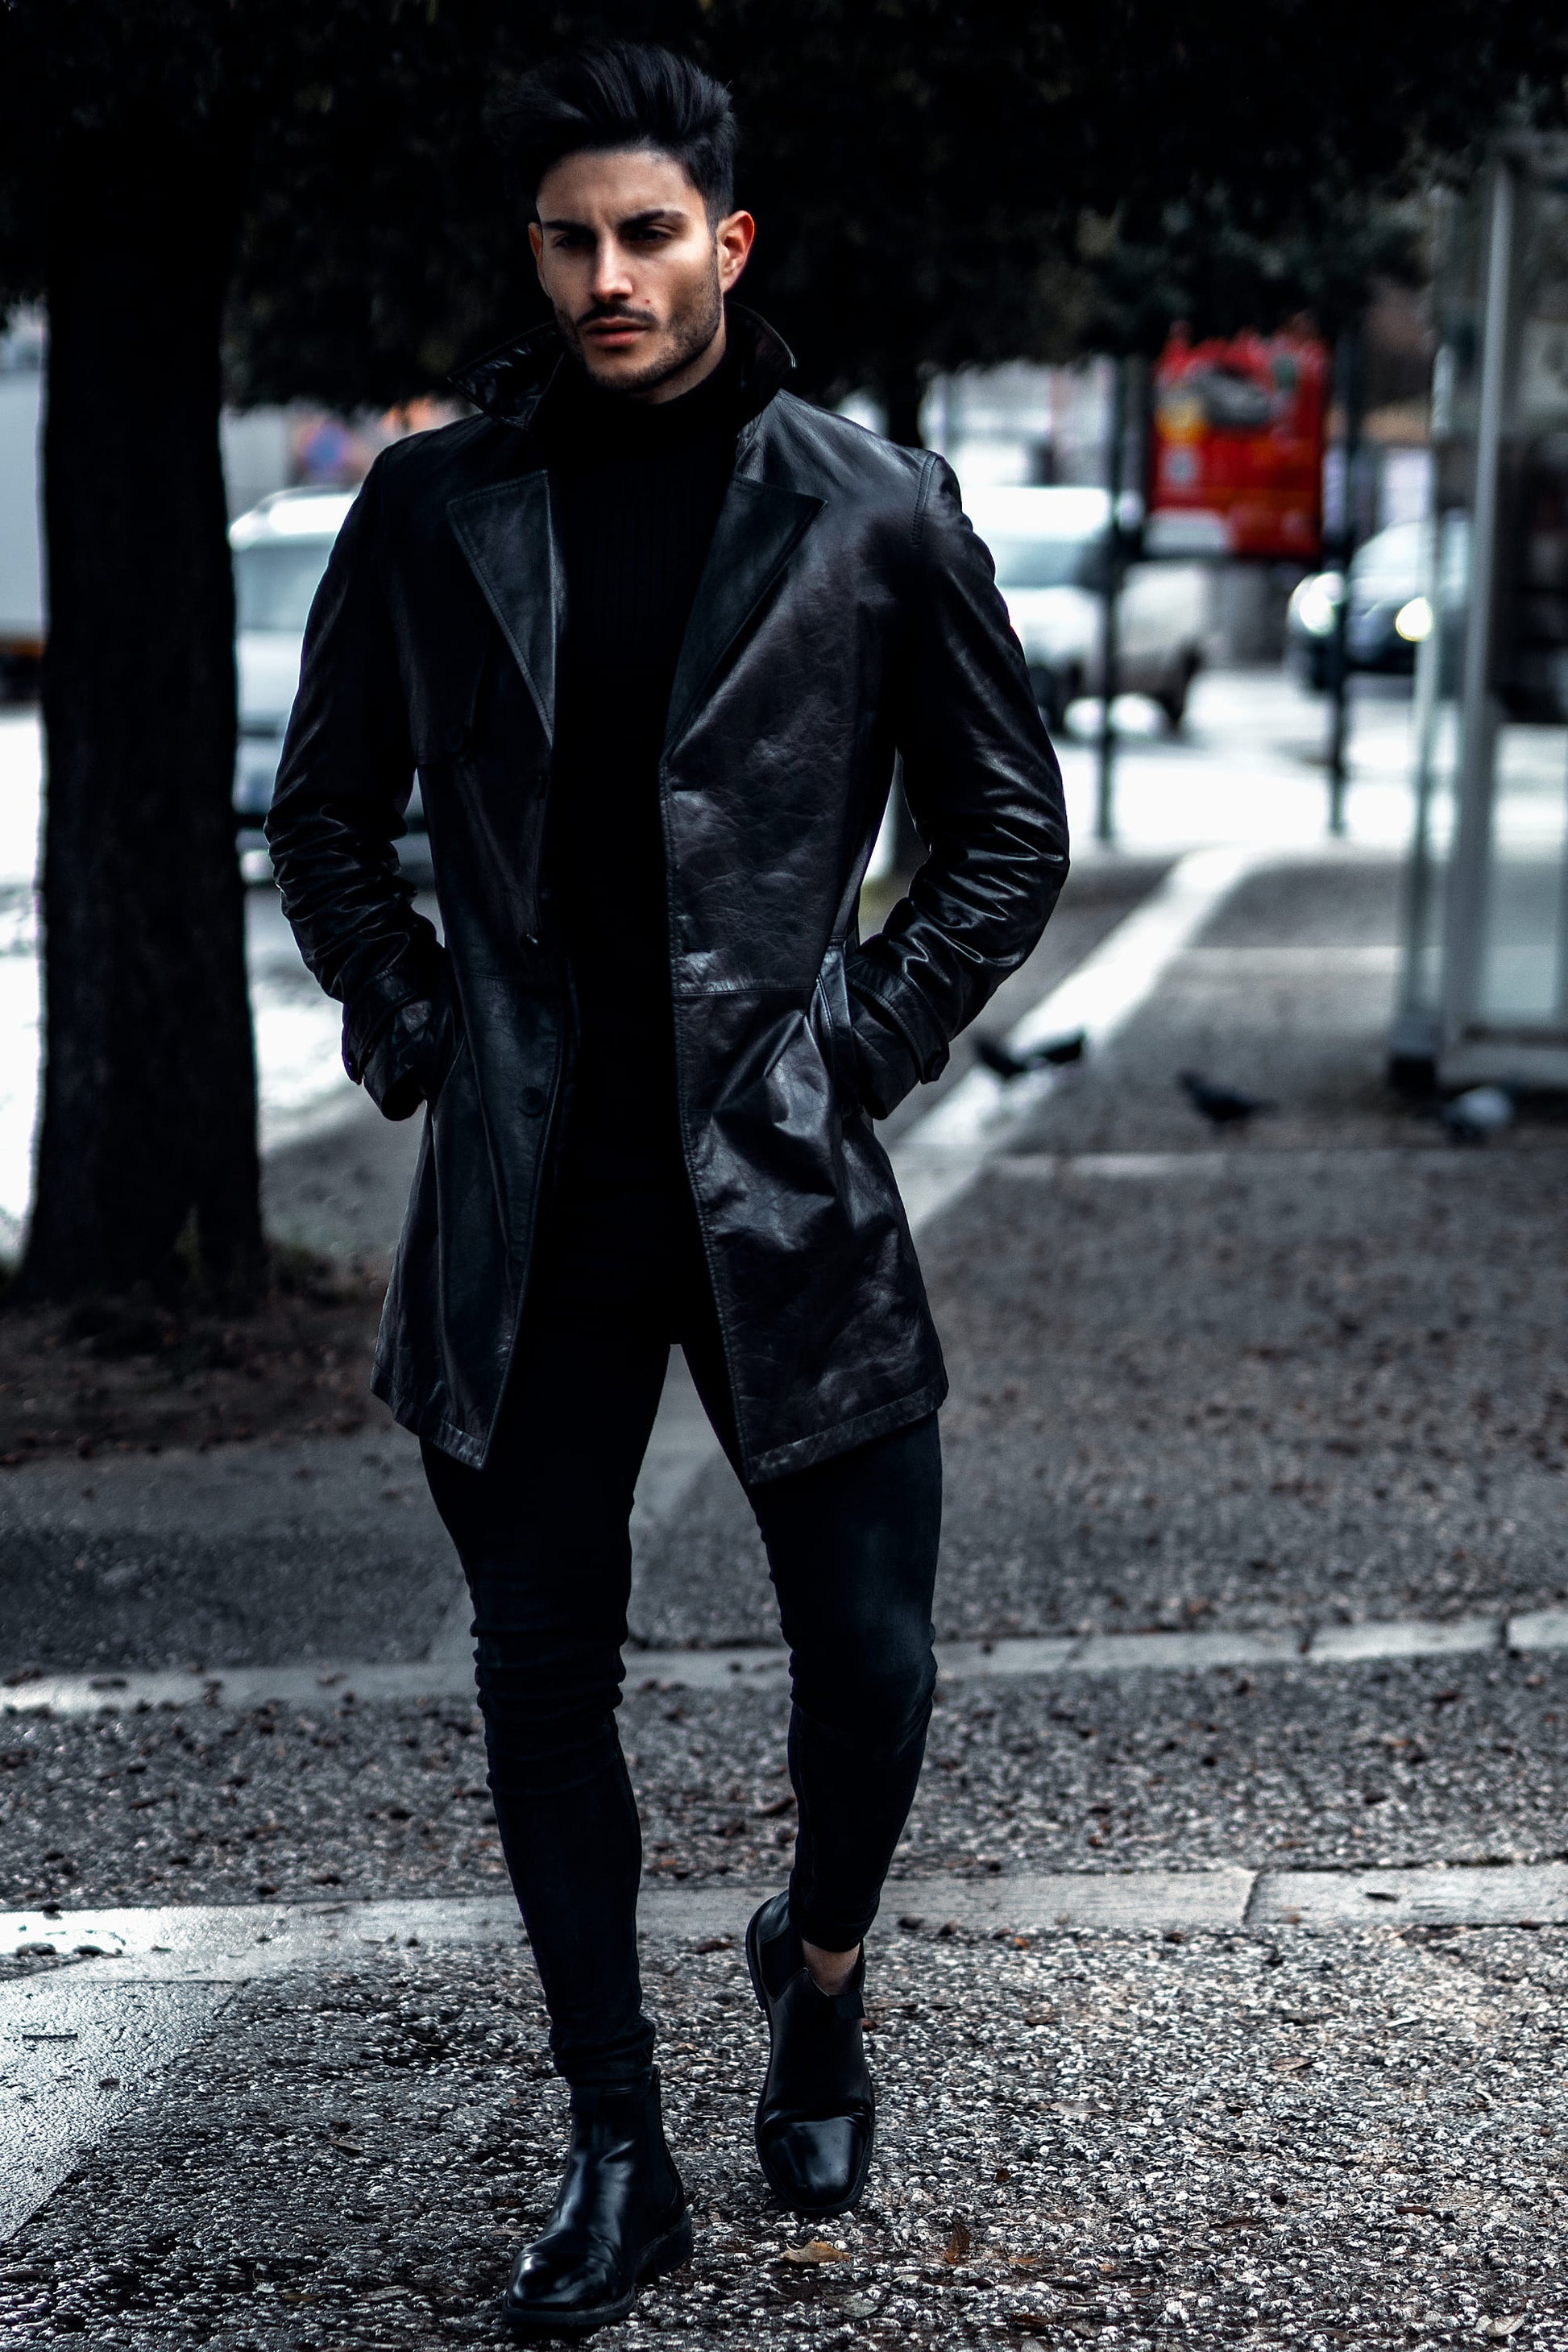 Palaleather Black Genuine Goatskin Leather Trench Coat Jacket with Fur Lining Winter Leather Jacket, Black / Mink Fur Collar + Down / Custom Size